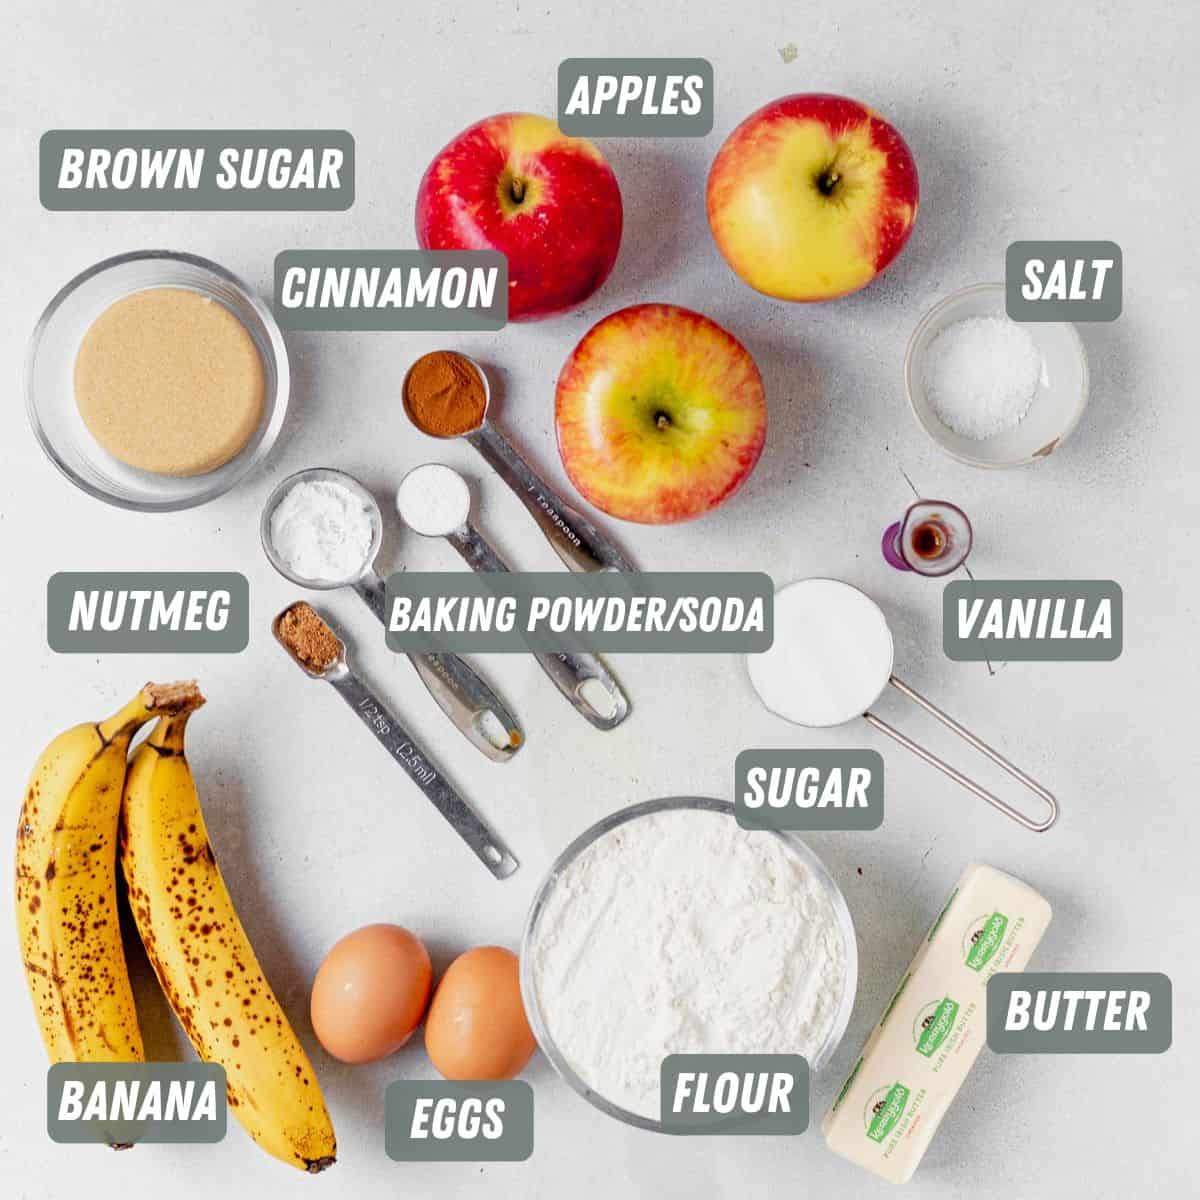 bananas, eggs, flour, butter, sugar, brown sugar, apples, cinnamon and leavens on a table